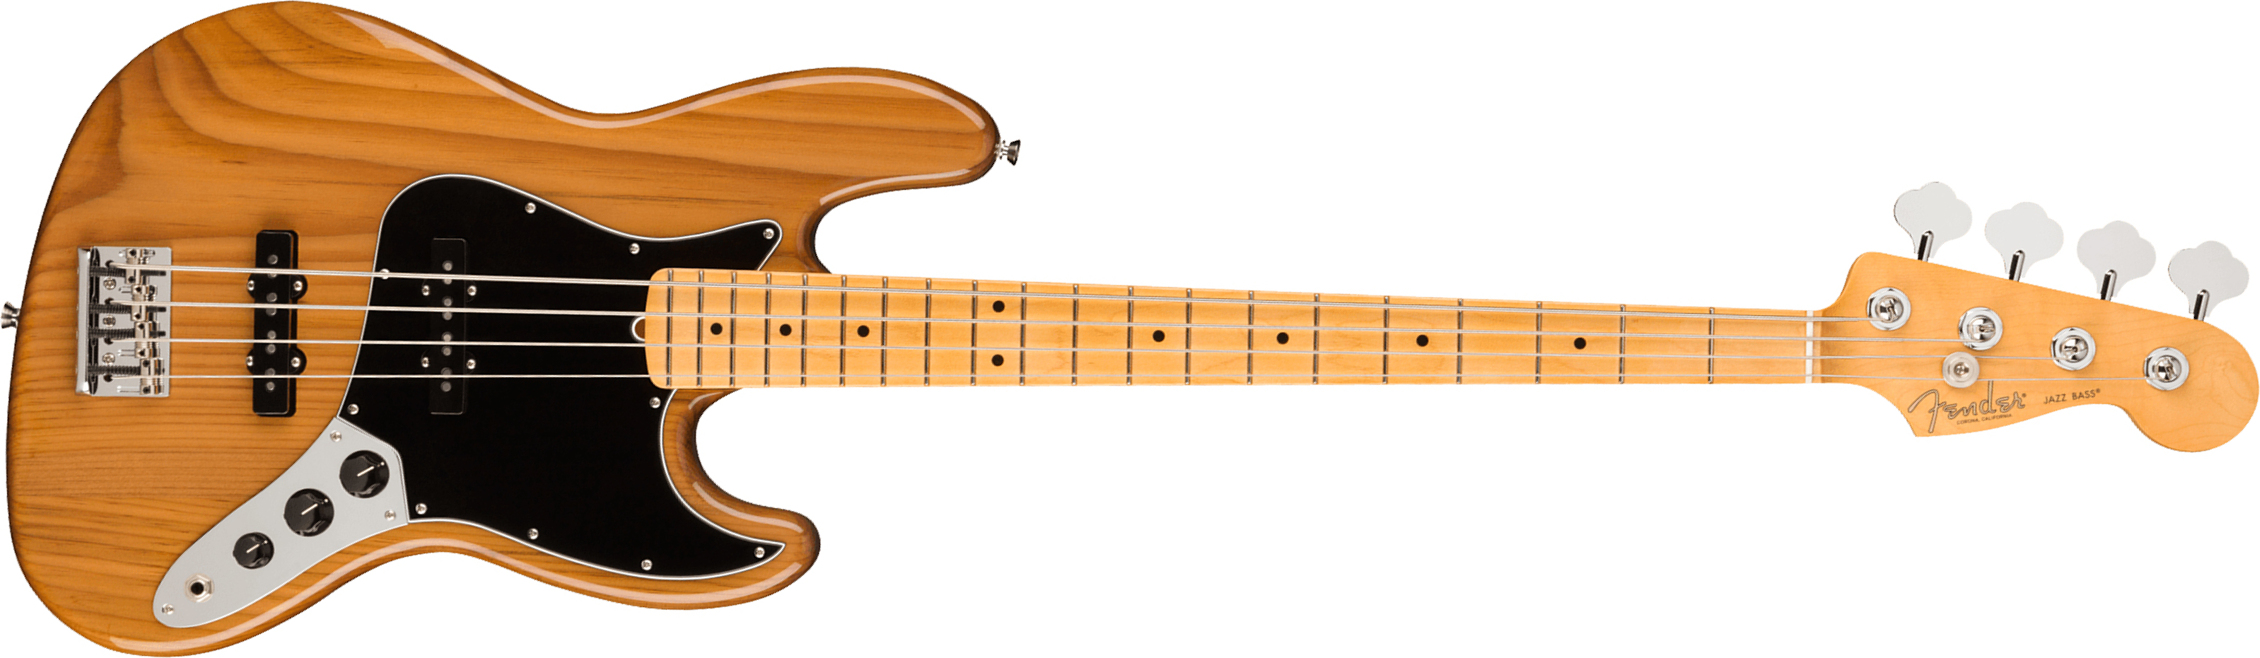 Fender Jazz Bass American Professional Ii Usa Mn - Roasted Pine - Bajo eléctrico de cuerpo sólido - Main picture